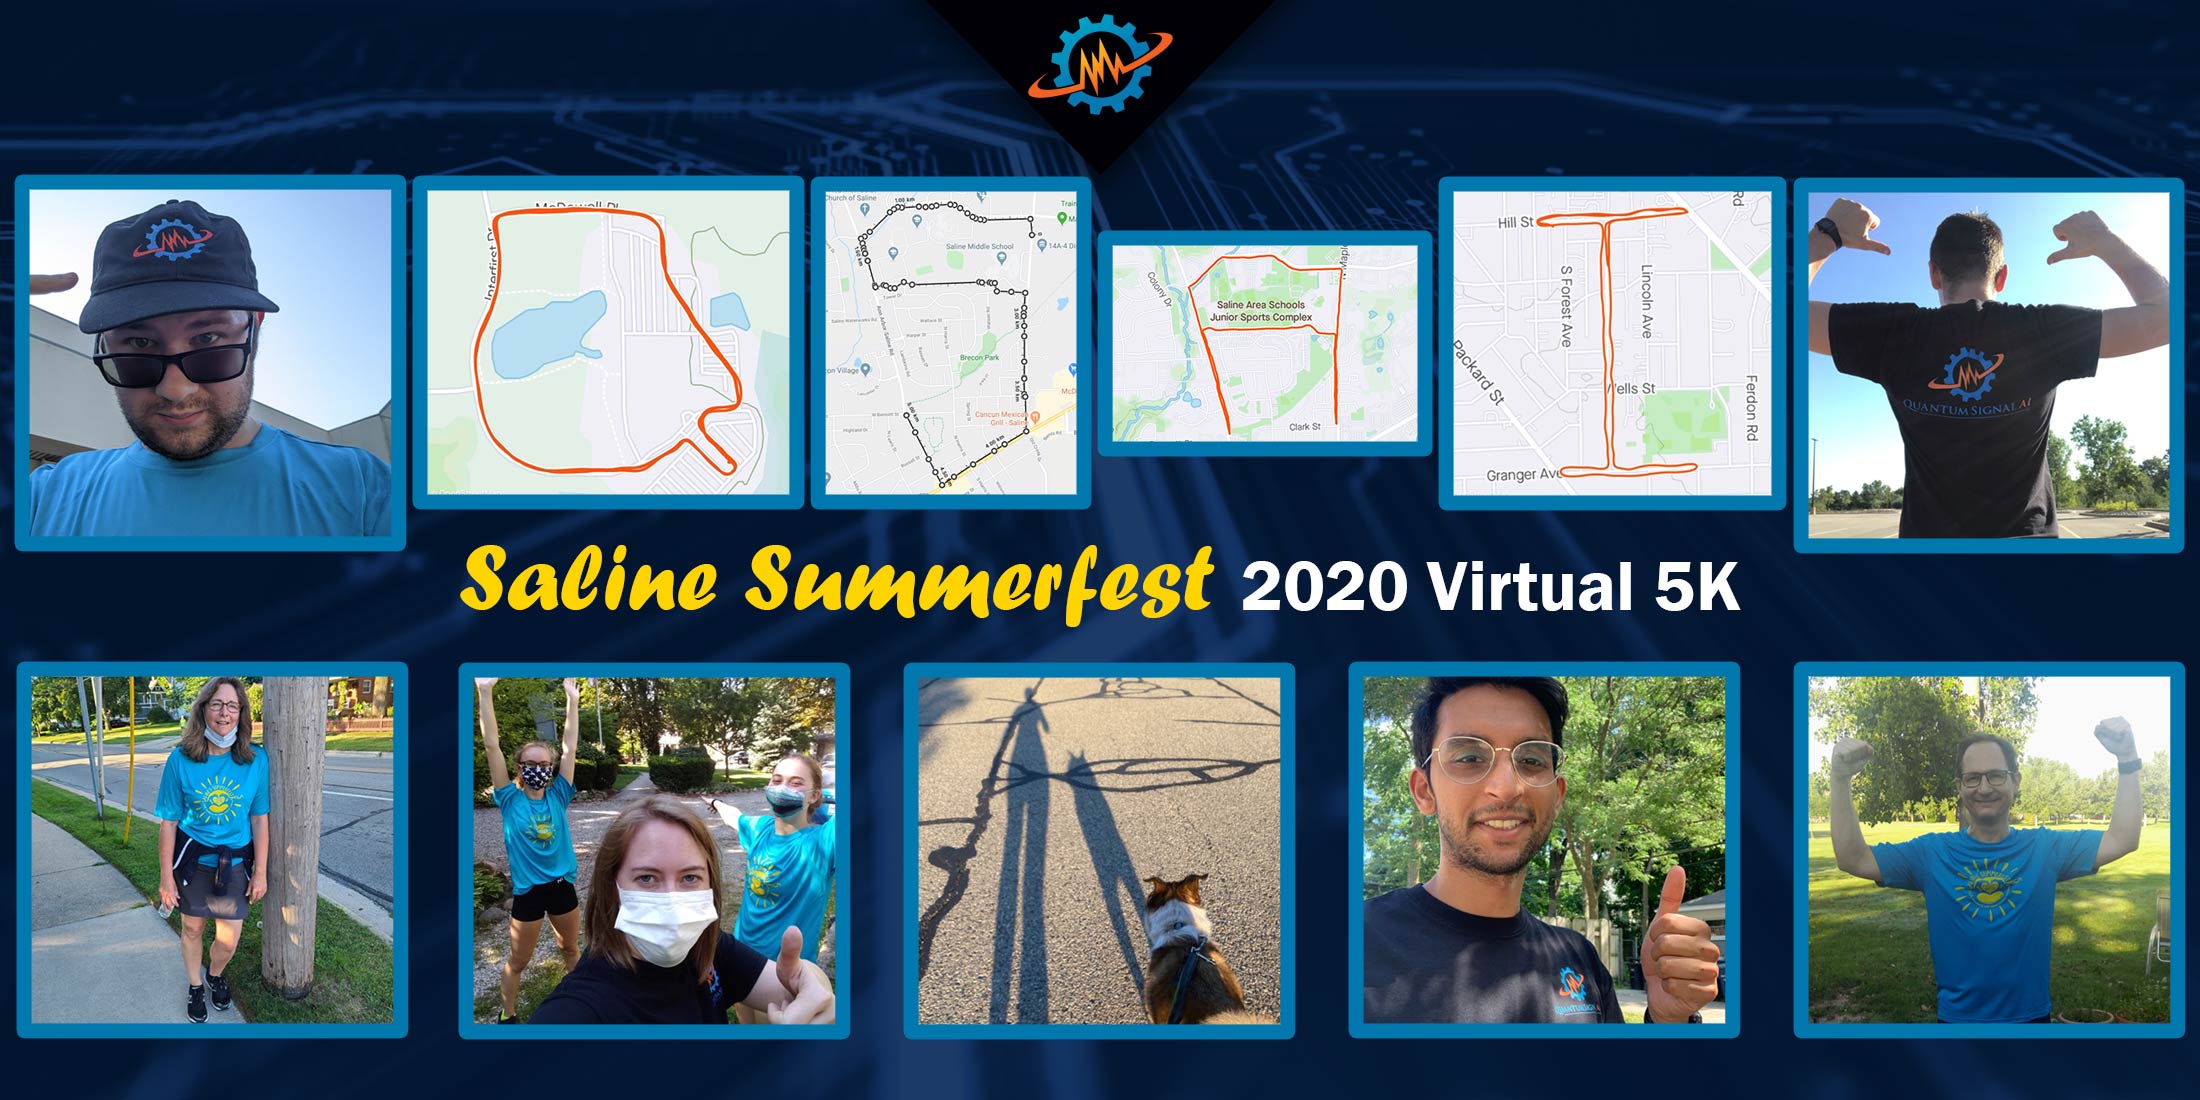 Saline Summerfest 2020 Virtual 5k selfies and race courses